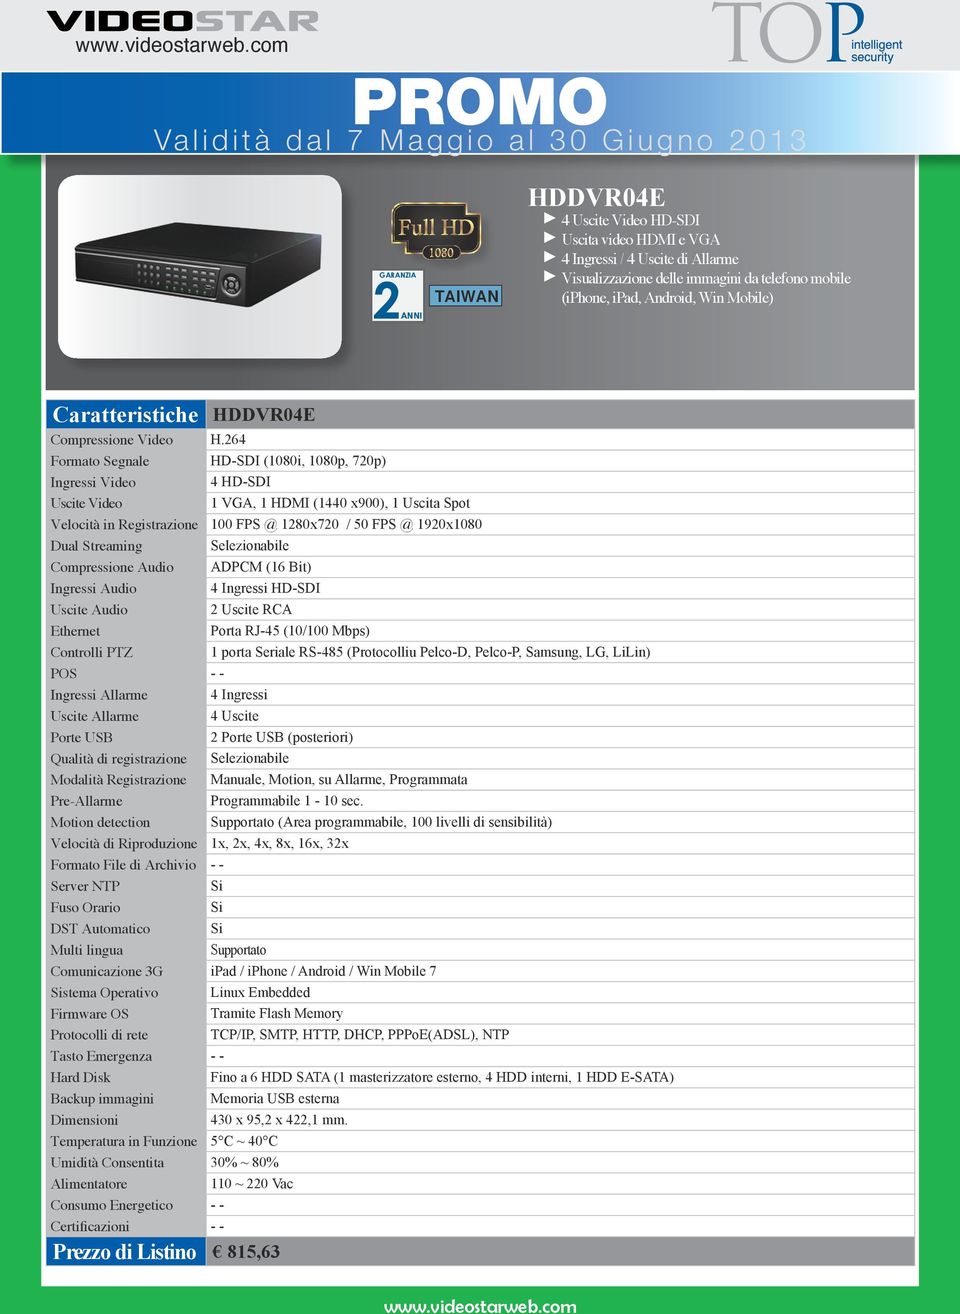 264 Formato Segnale HD-SDI (1080i, 1080p, 720p) Ingressi Video 4 HD-SDI Uscite Video 1 VGA, 1 HDMI (1440 x900), 1 Uscita Spot Velocità in Registrazione 100 FPS @ 1280x720 / 50 FPS @ 1920x1080 Dual